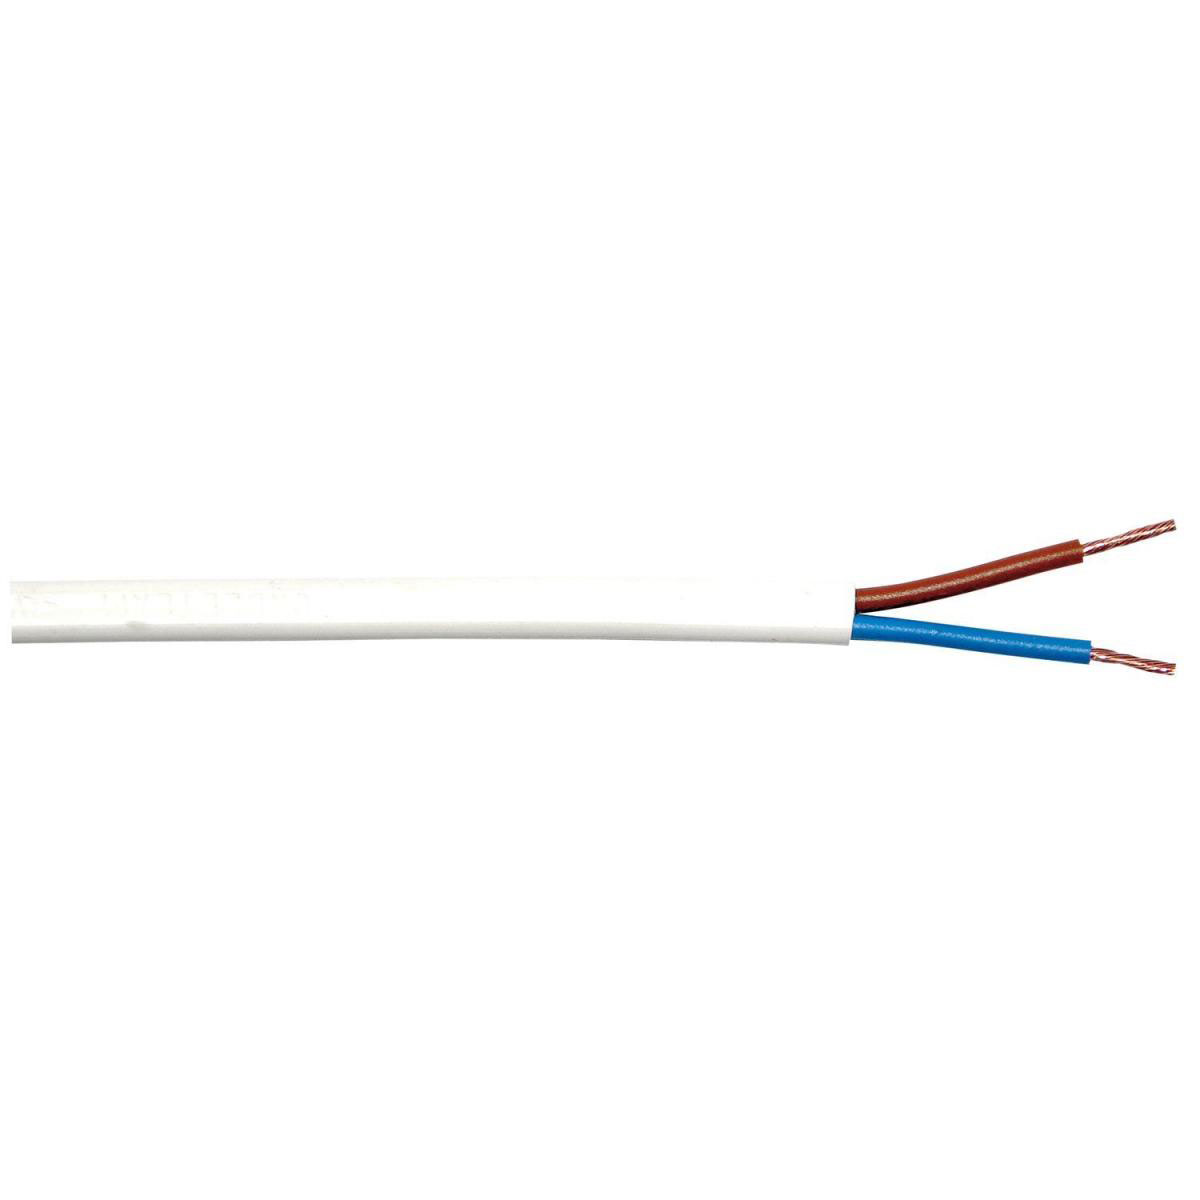 10m Kabel Netzkabel Elektrisch HO3VVH2-F 2x 0,75 Weiß 